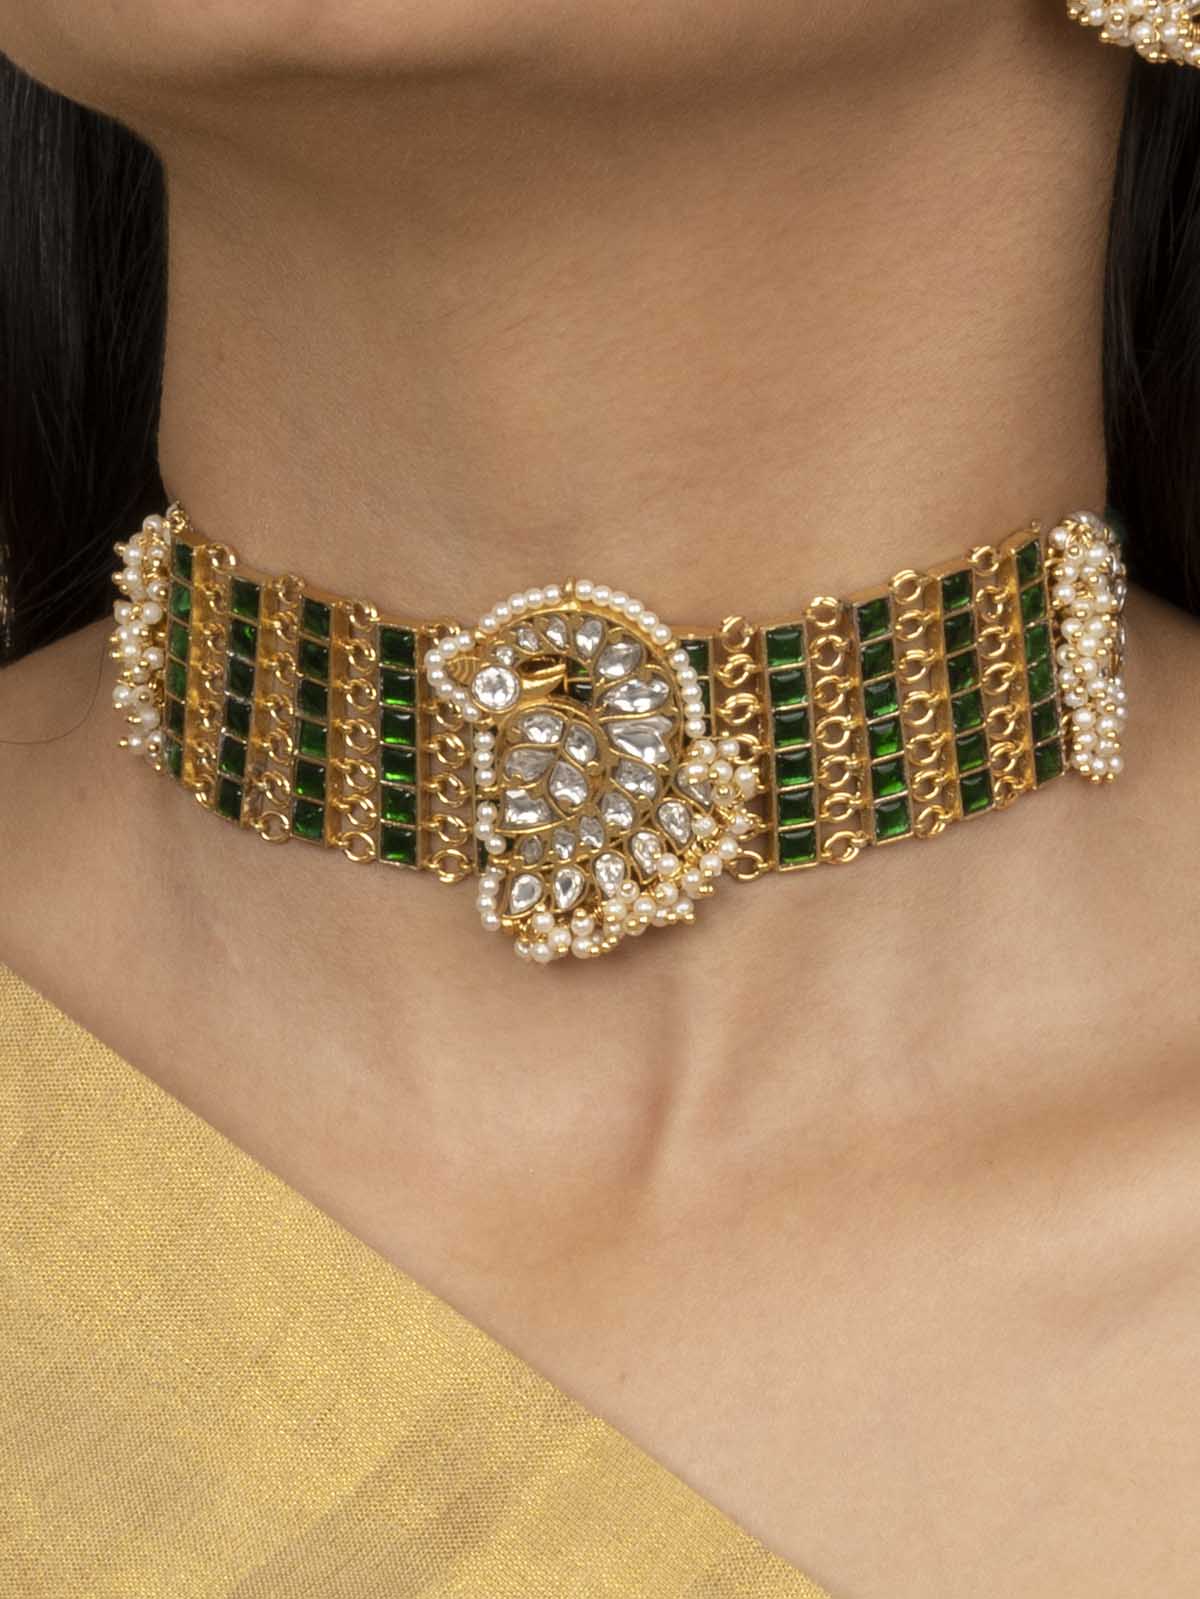 MR-S540WGR - Green Color Gold Plated Mishr Choker Necklace Set